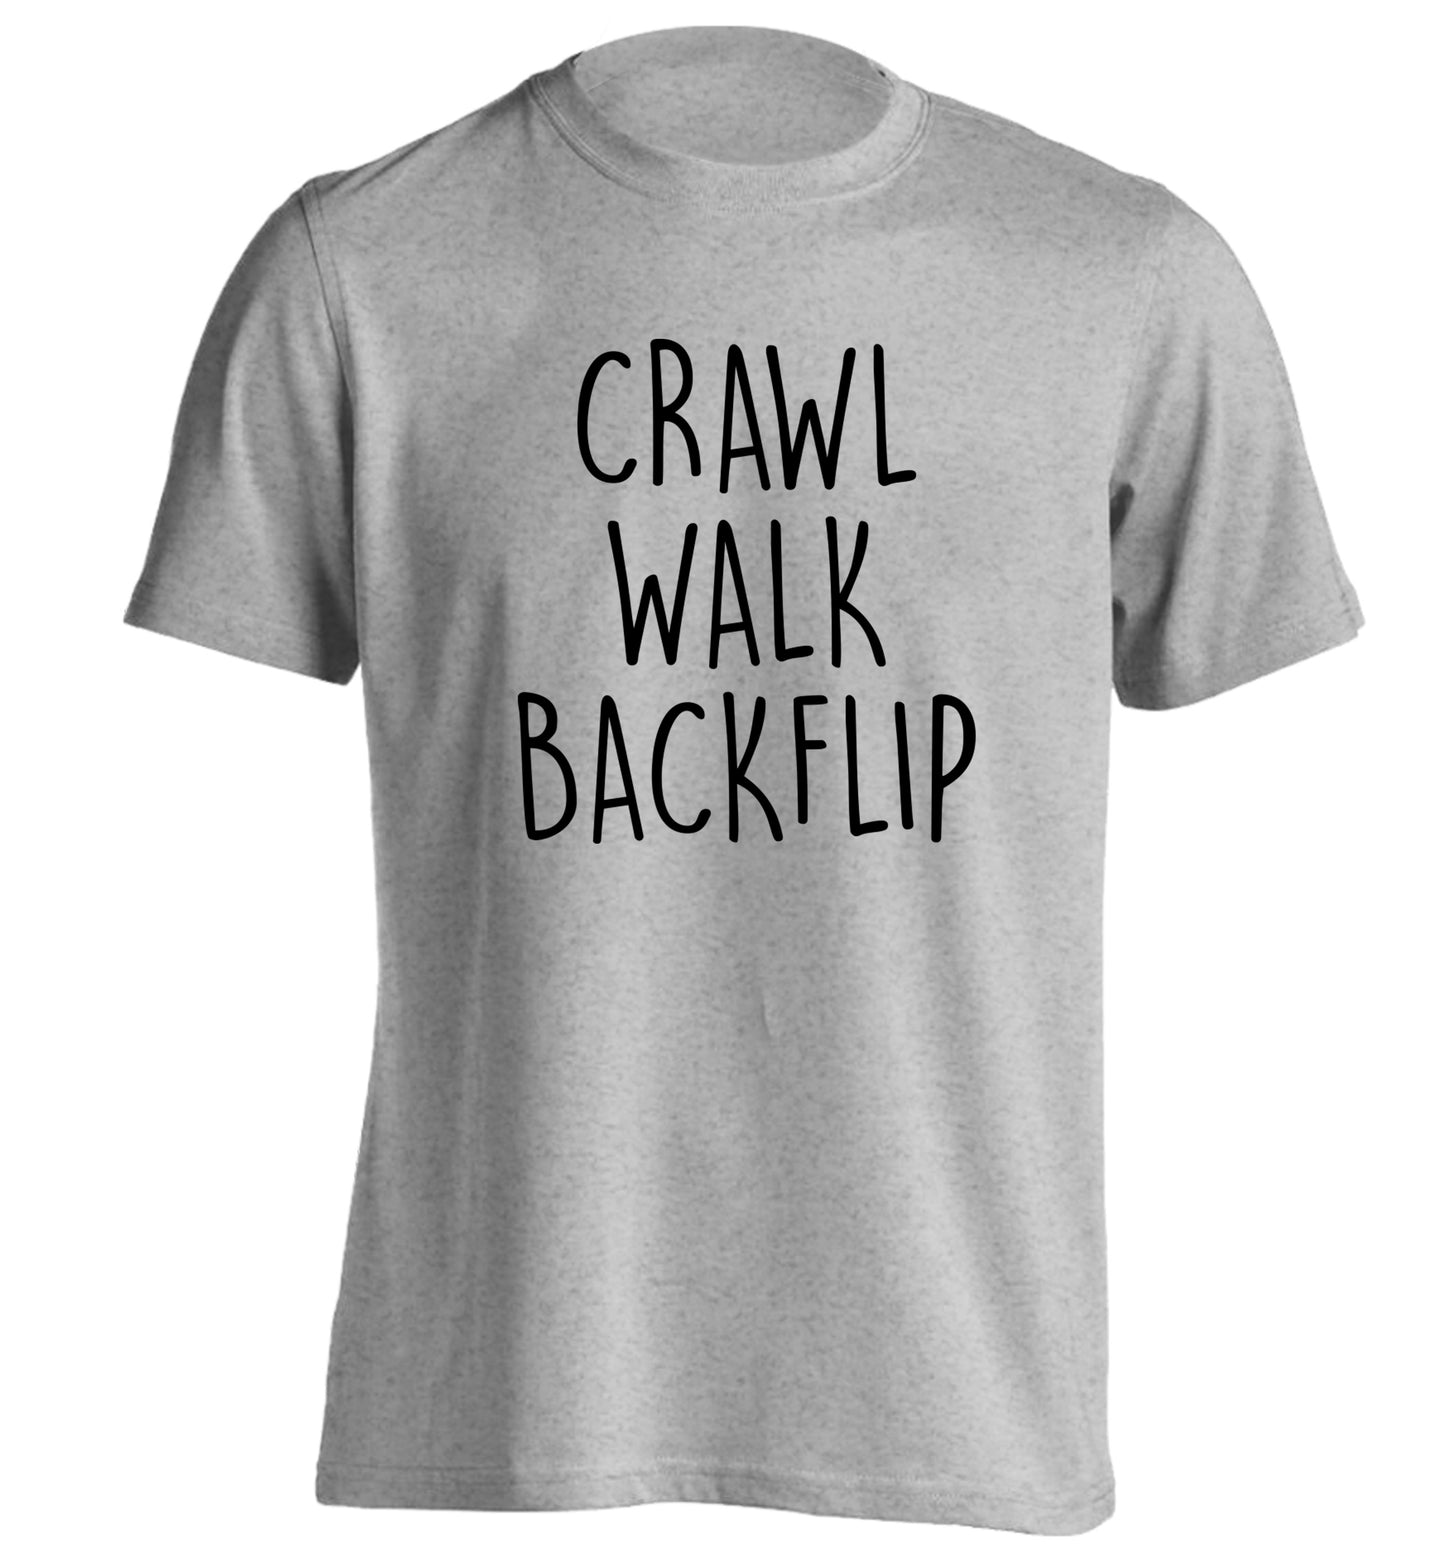 Crawl Walk Backflip adults unisex grey Tshirt 2XL